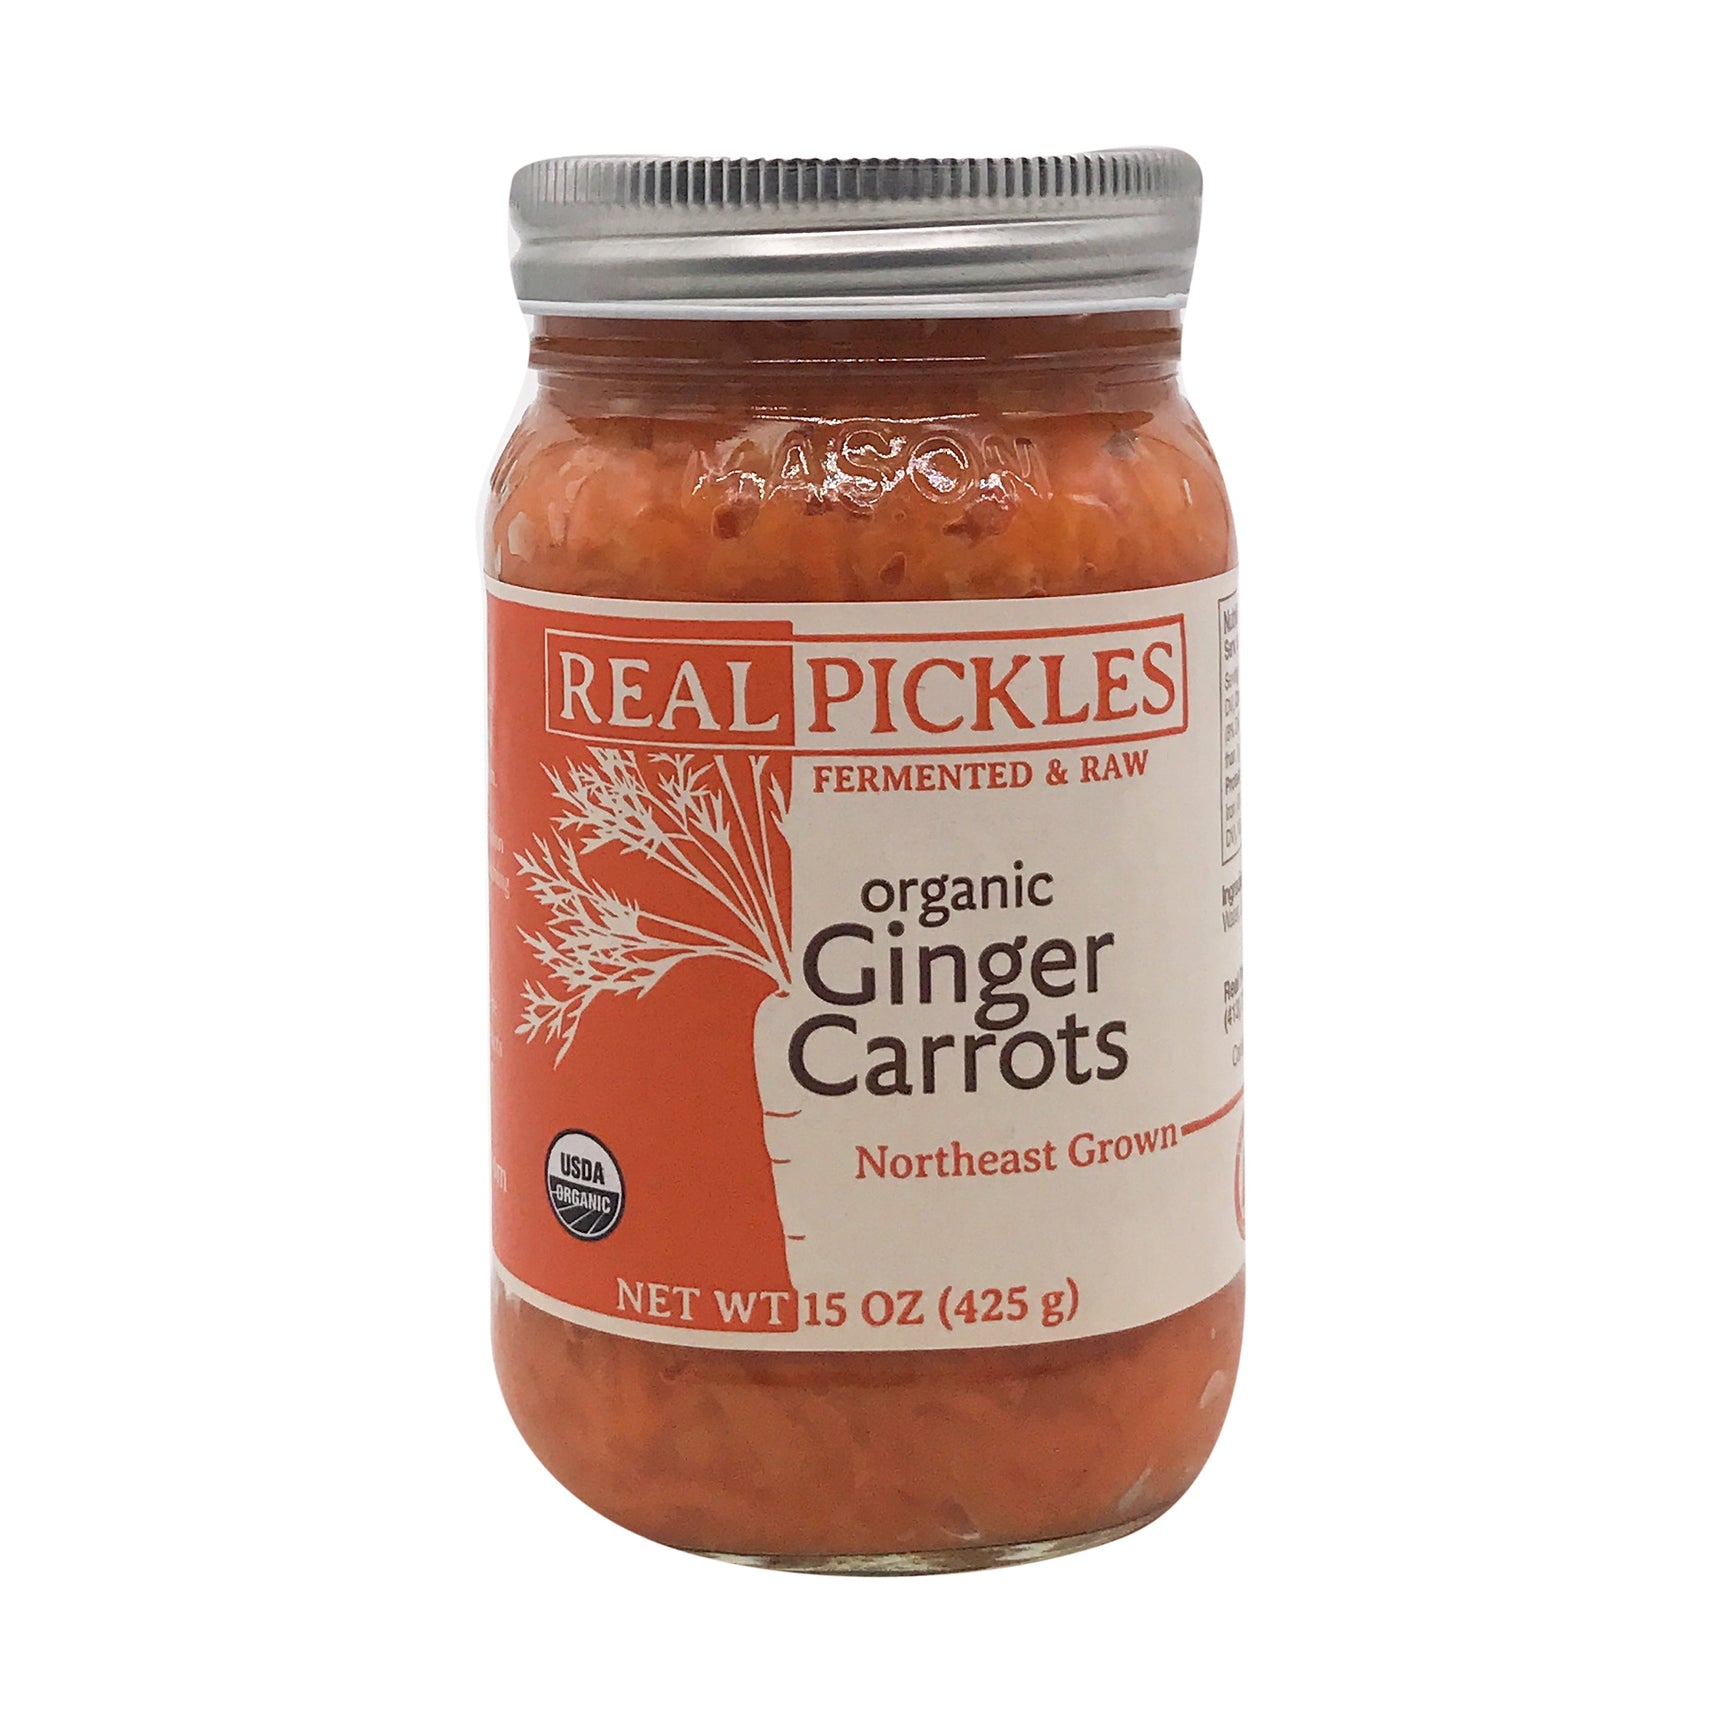 Real Pickles: Organic Ginger Carrot